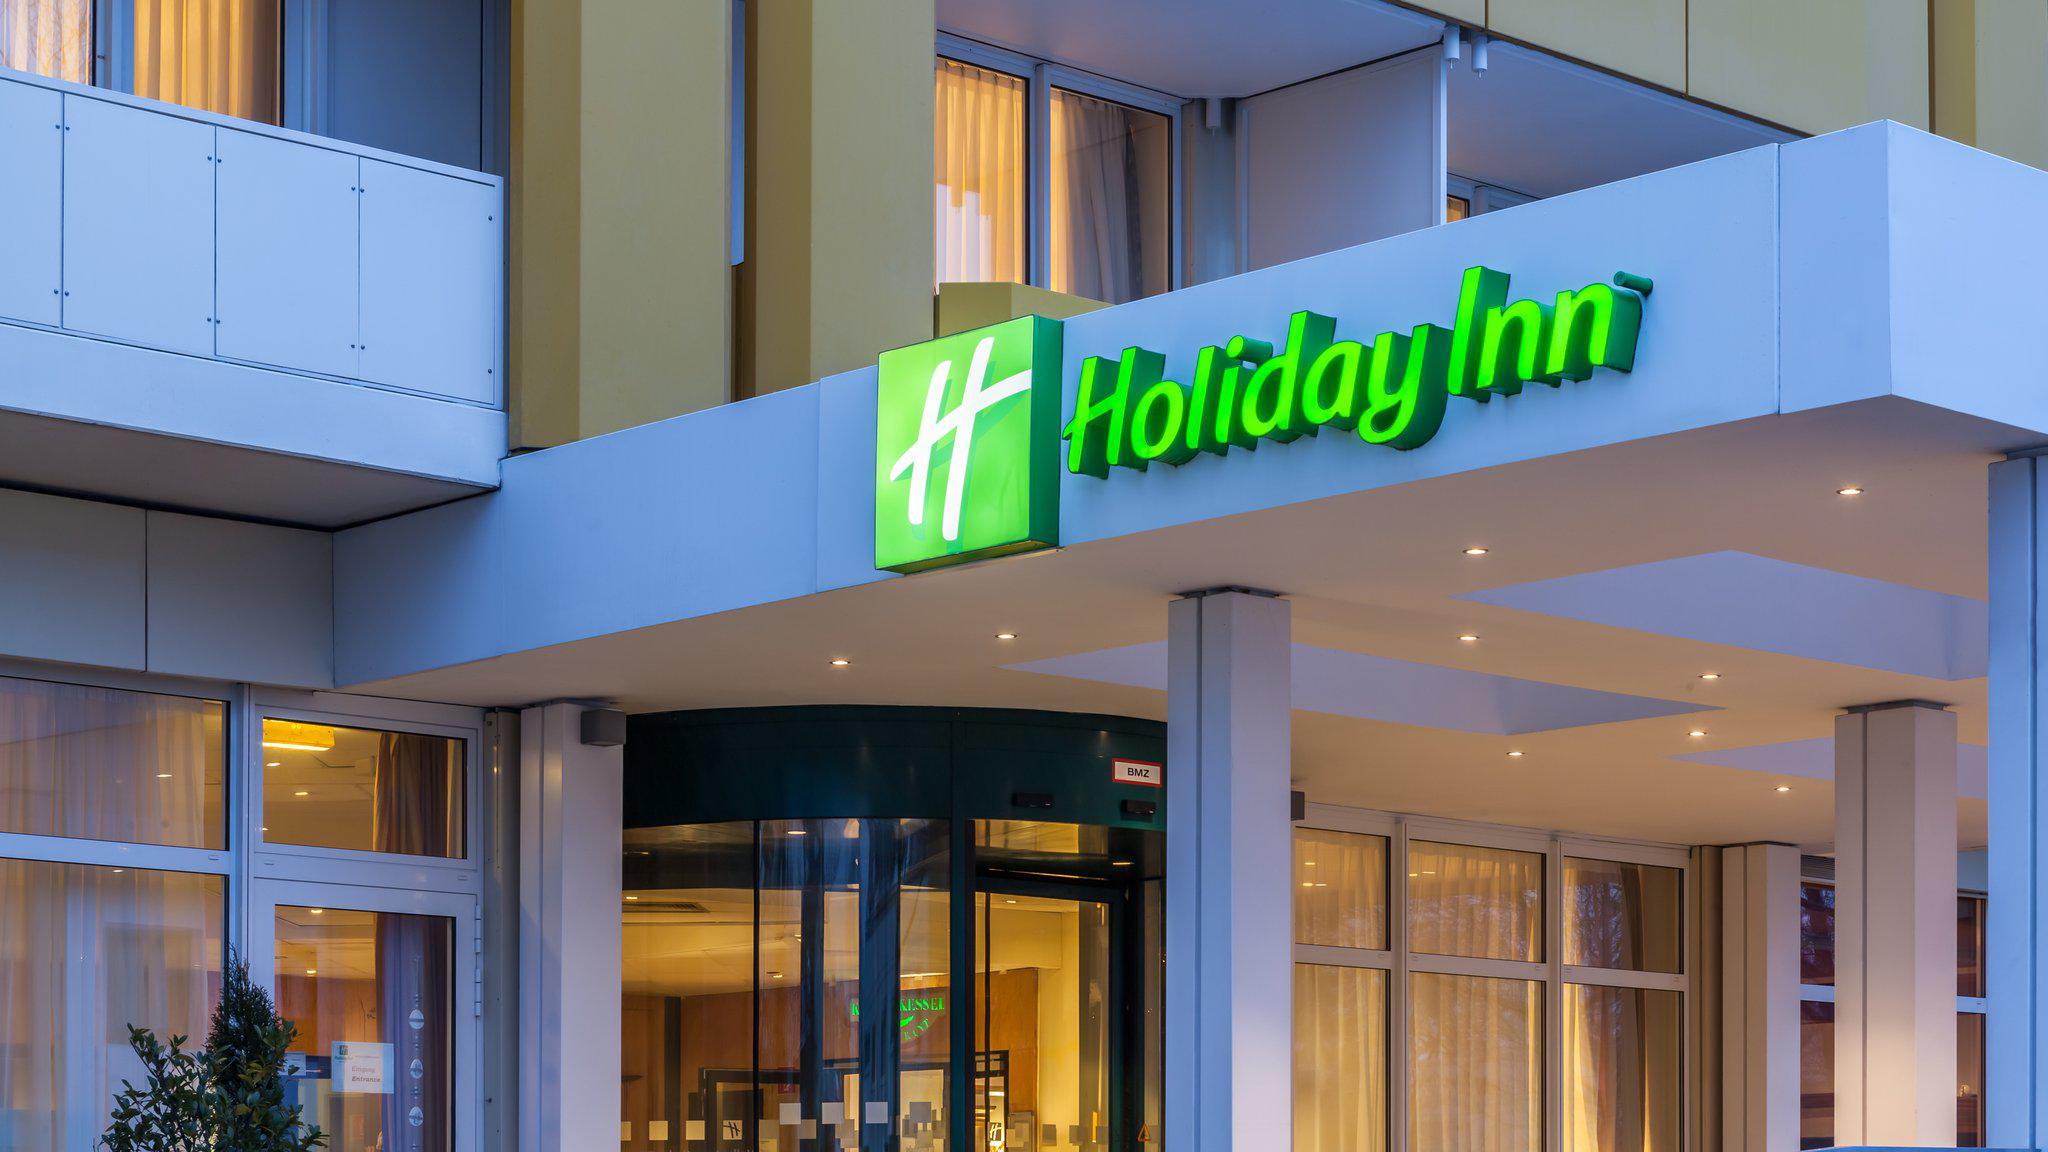 Holiday Inn Munich - South, an IHG Hotel, Kistlerhofstrasse 142 in München